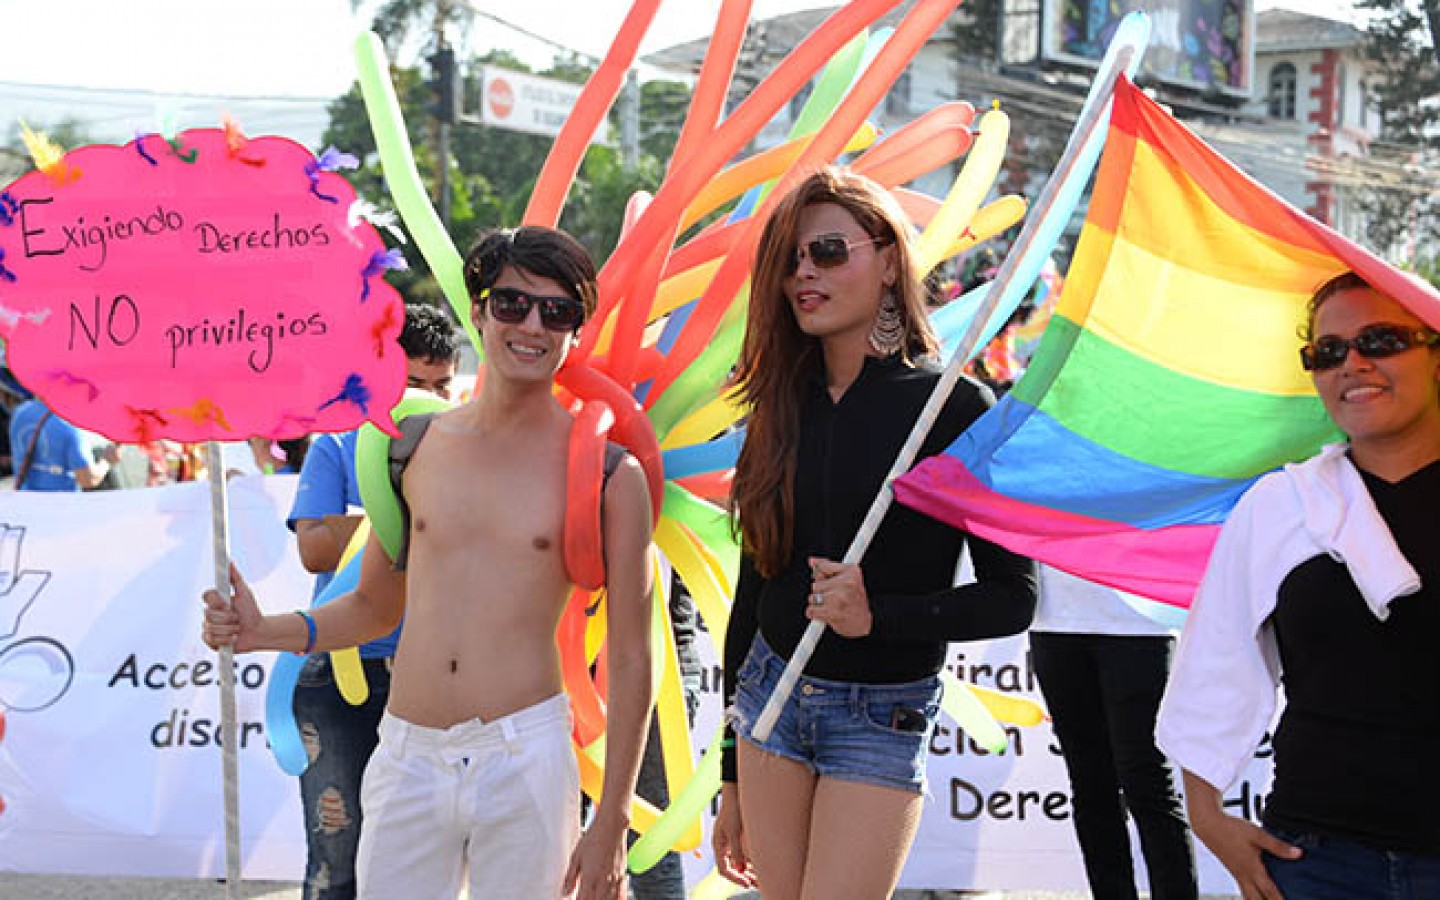 IndexAwards2017: Arcoiris fights homophobia in Honduras Index on Censorship